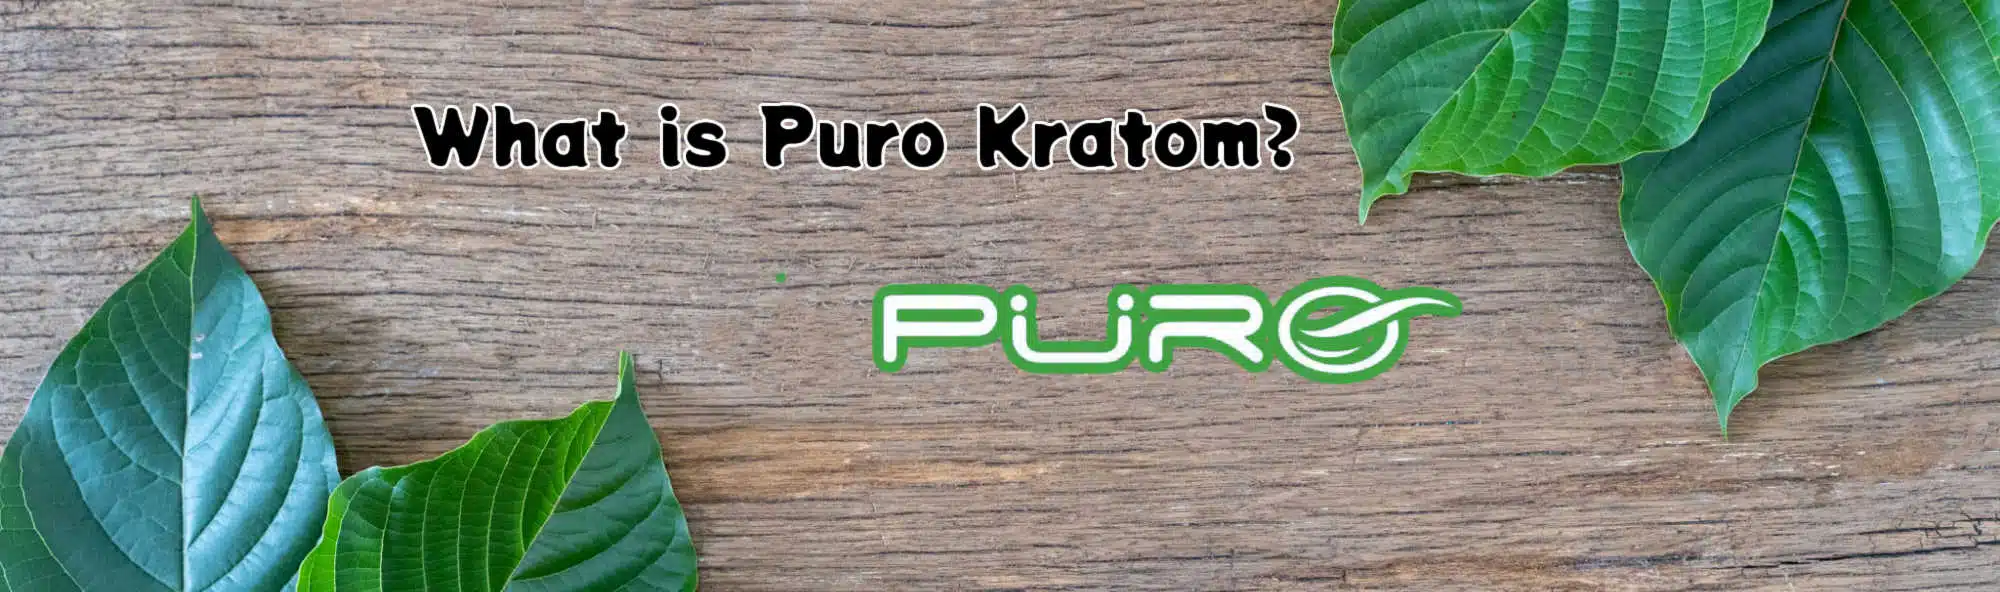 "what is puro kratom?" banner